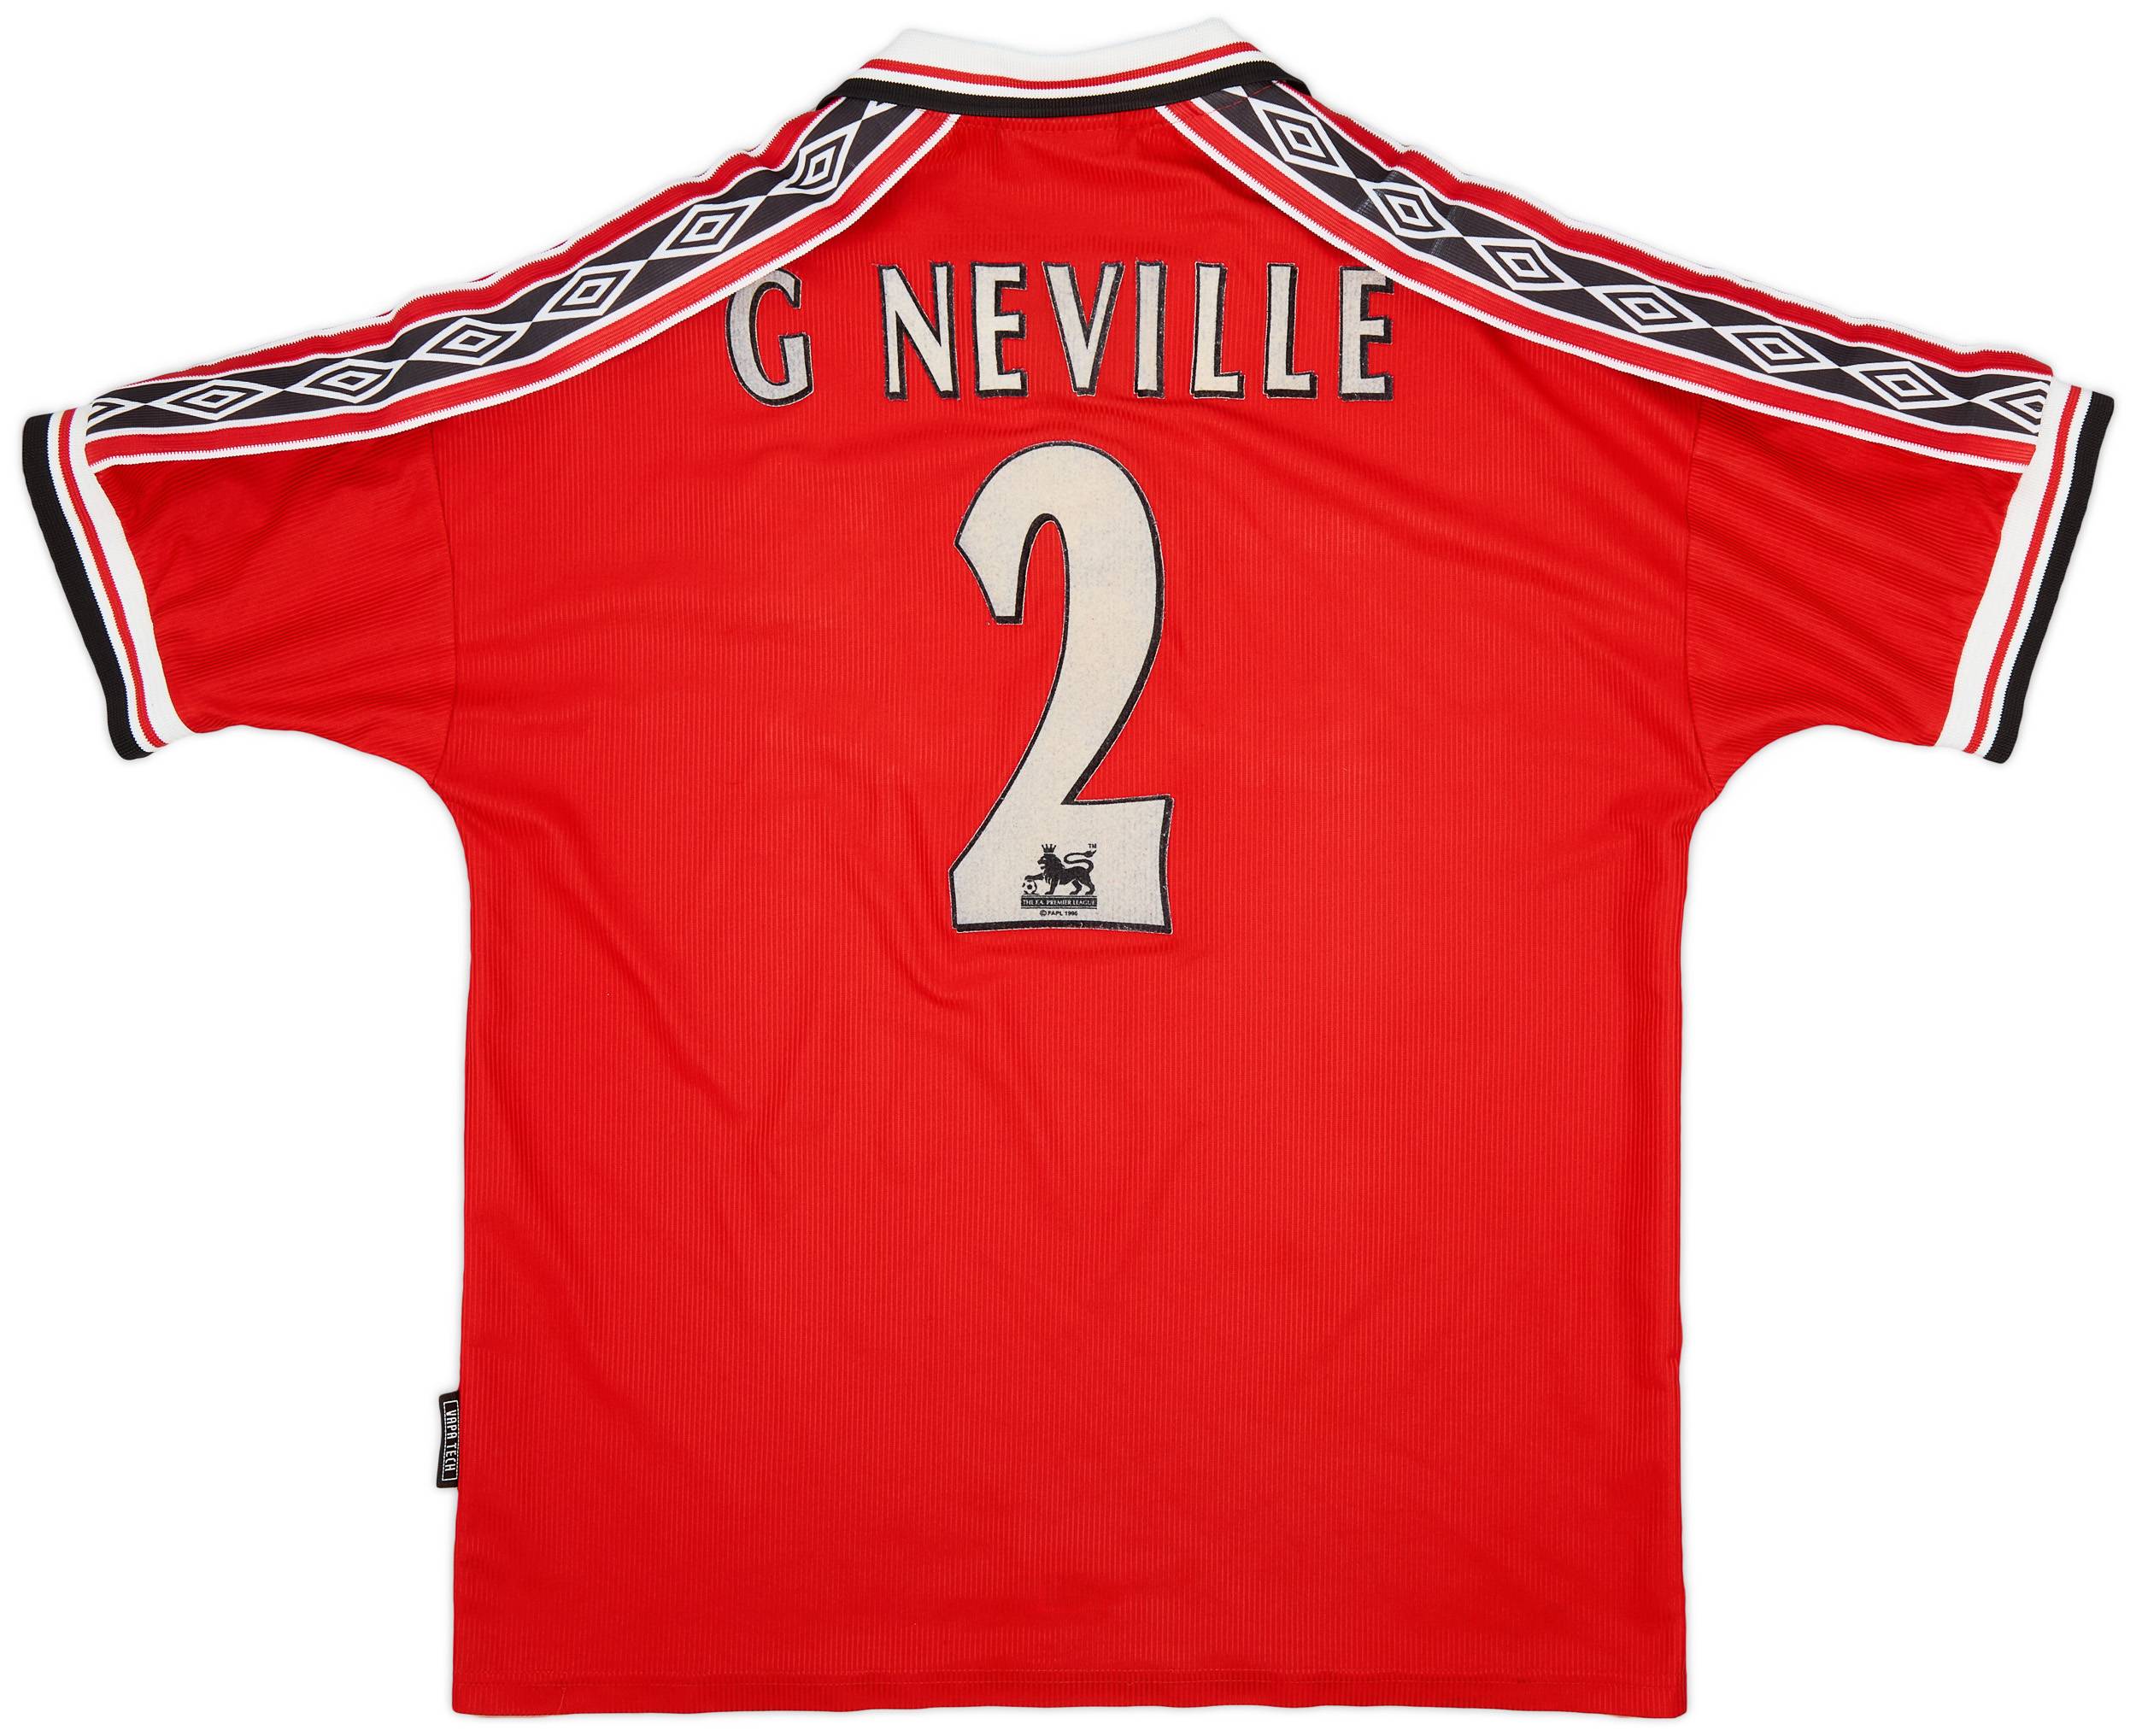 1998-00 Manchester United Home Shirt G Neville #2 - 5/10 - (L)